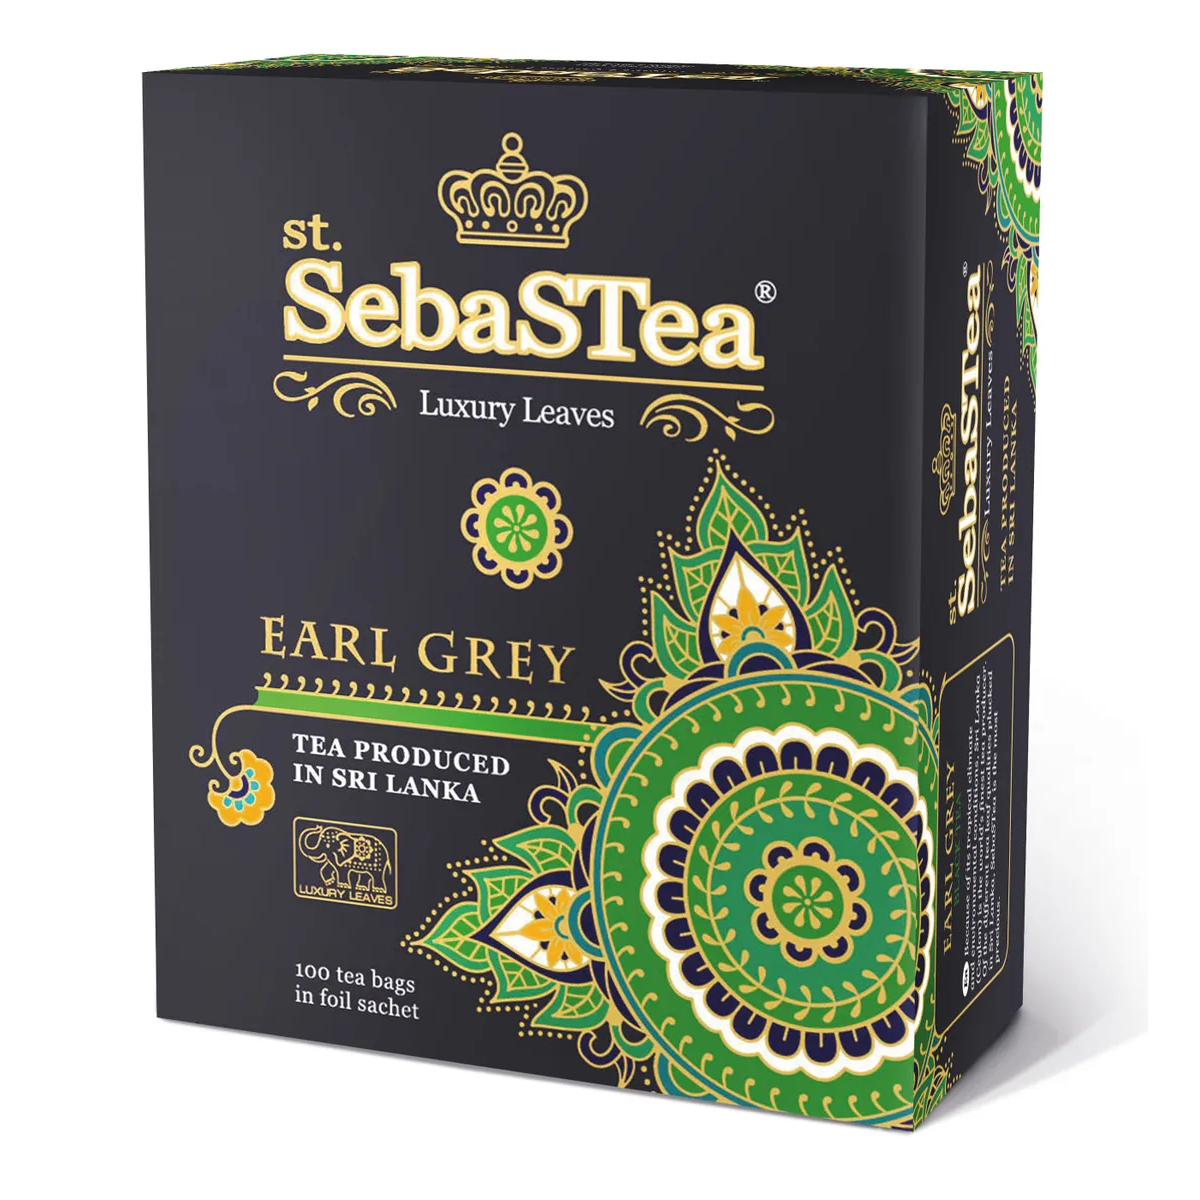 чай sebastea fantasy 5 2 г x 20 шт Чай чёрный SebaSTea Earl Grey пакетированный, 100х1.5 г